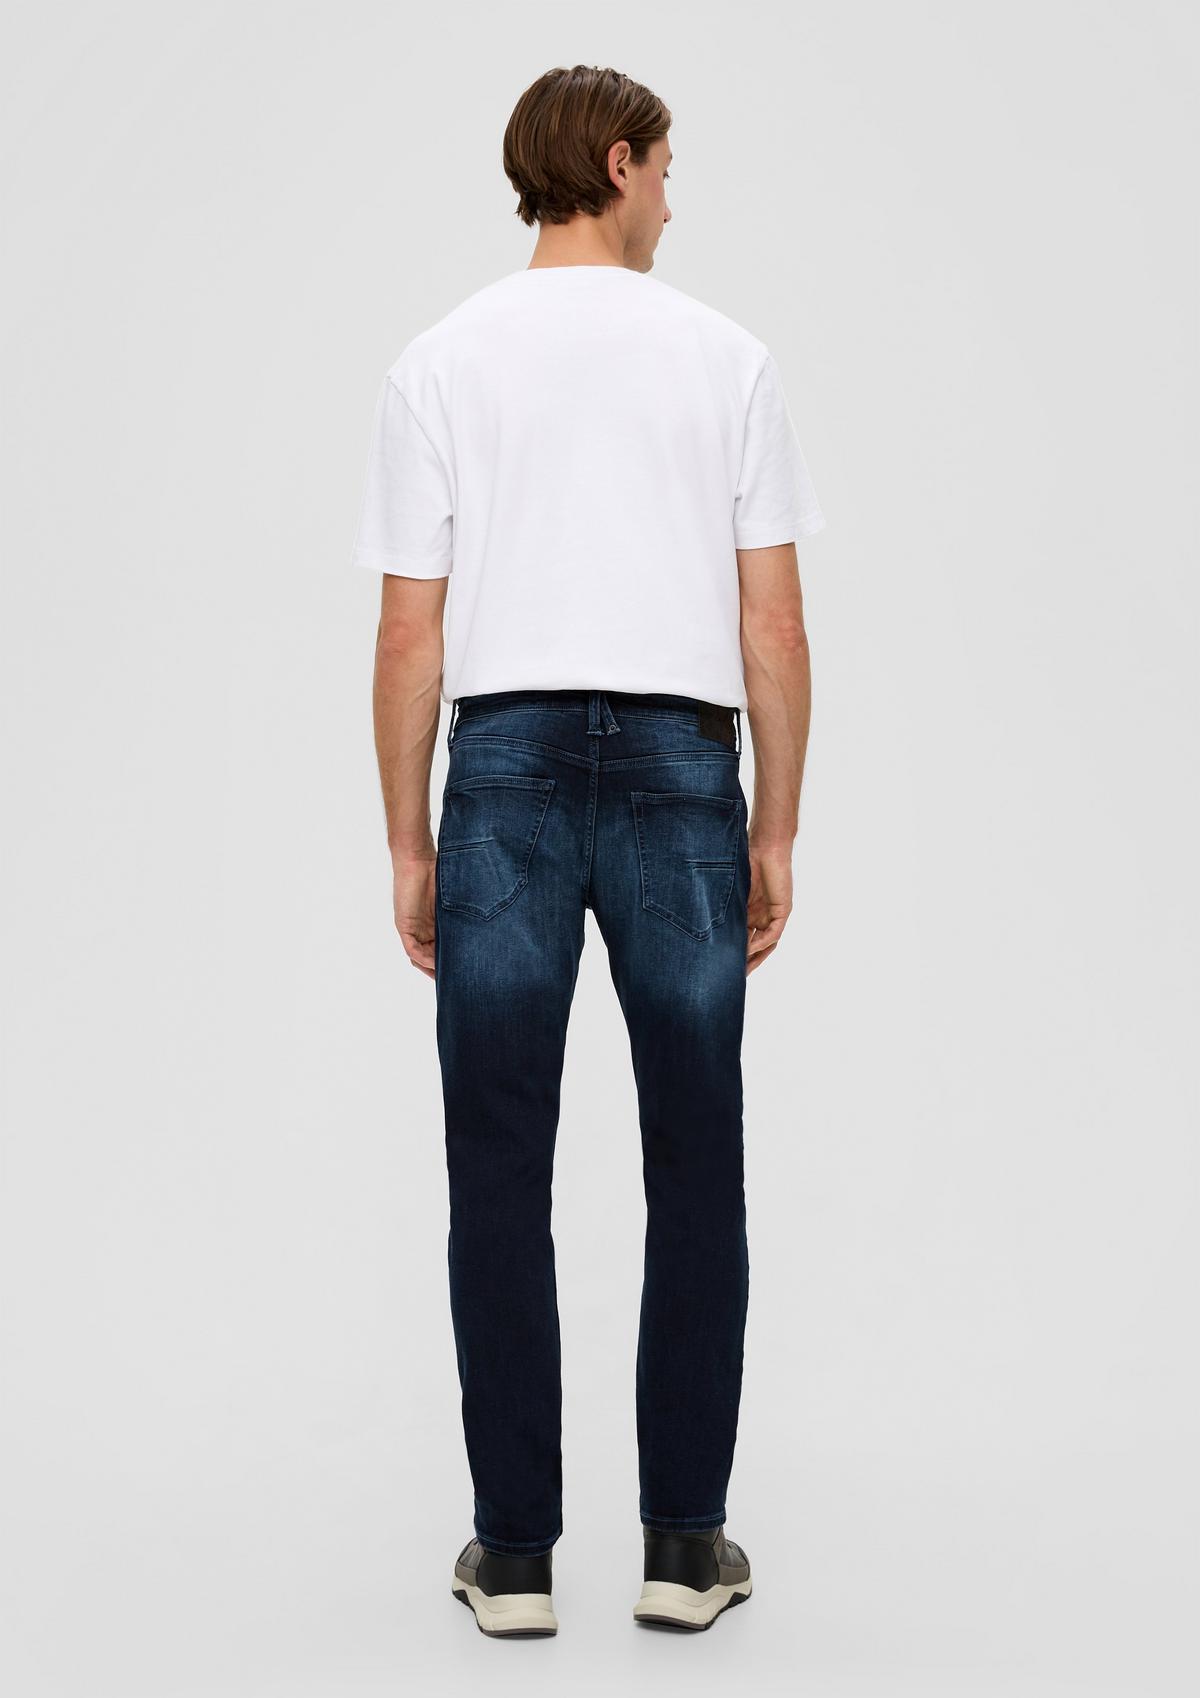 s.Oliver Jeans / Regular Fit / Mid Rise / Tapered Leg / 5-Pocket Style